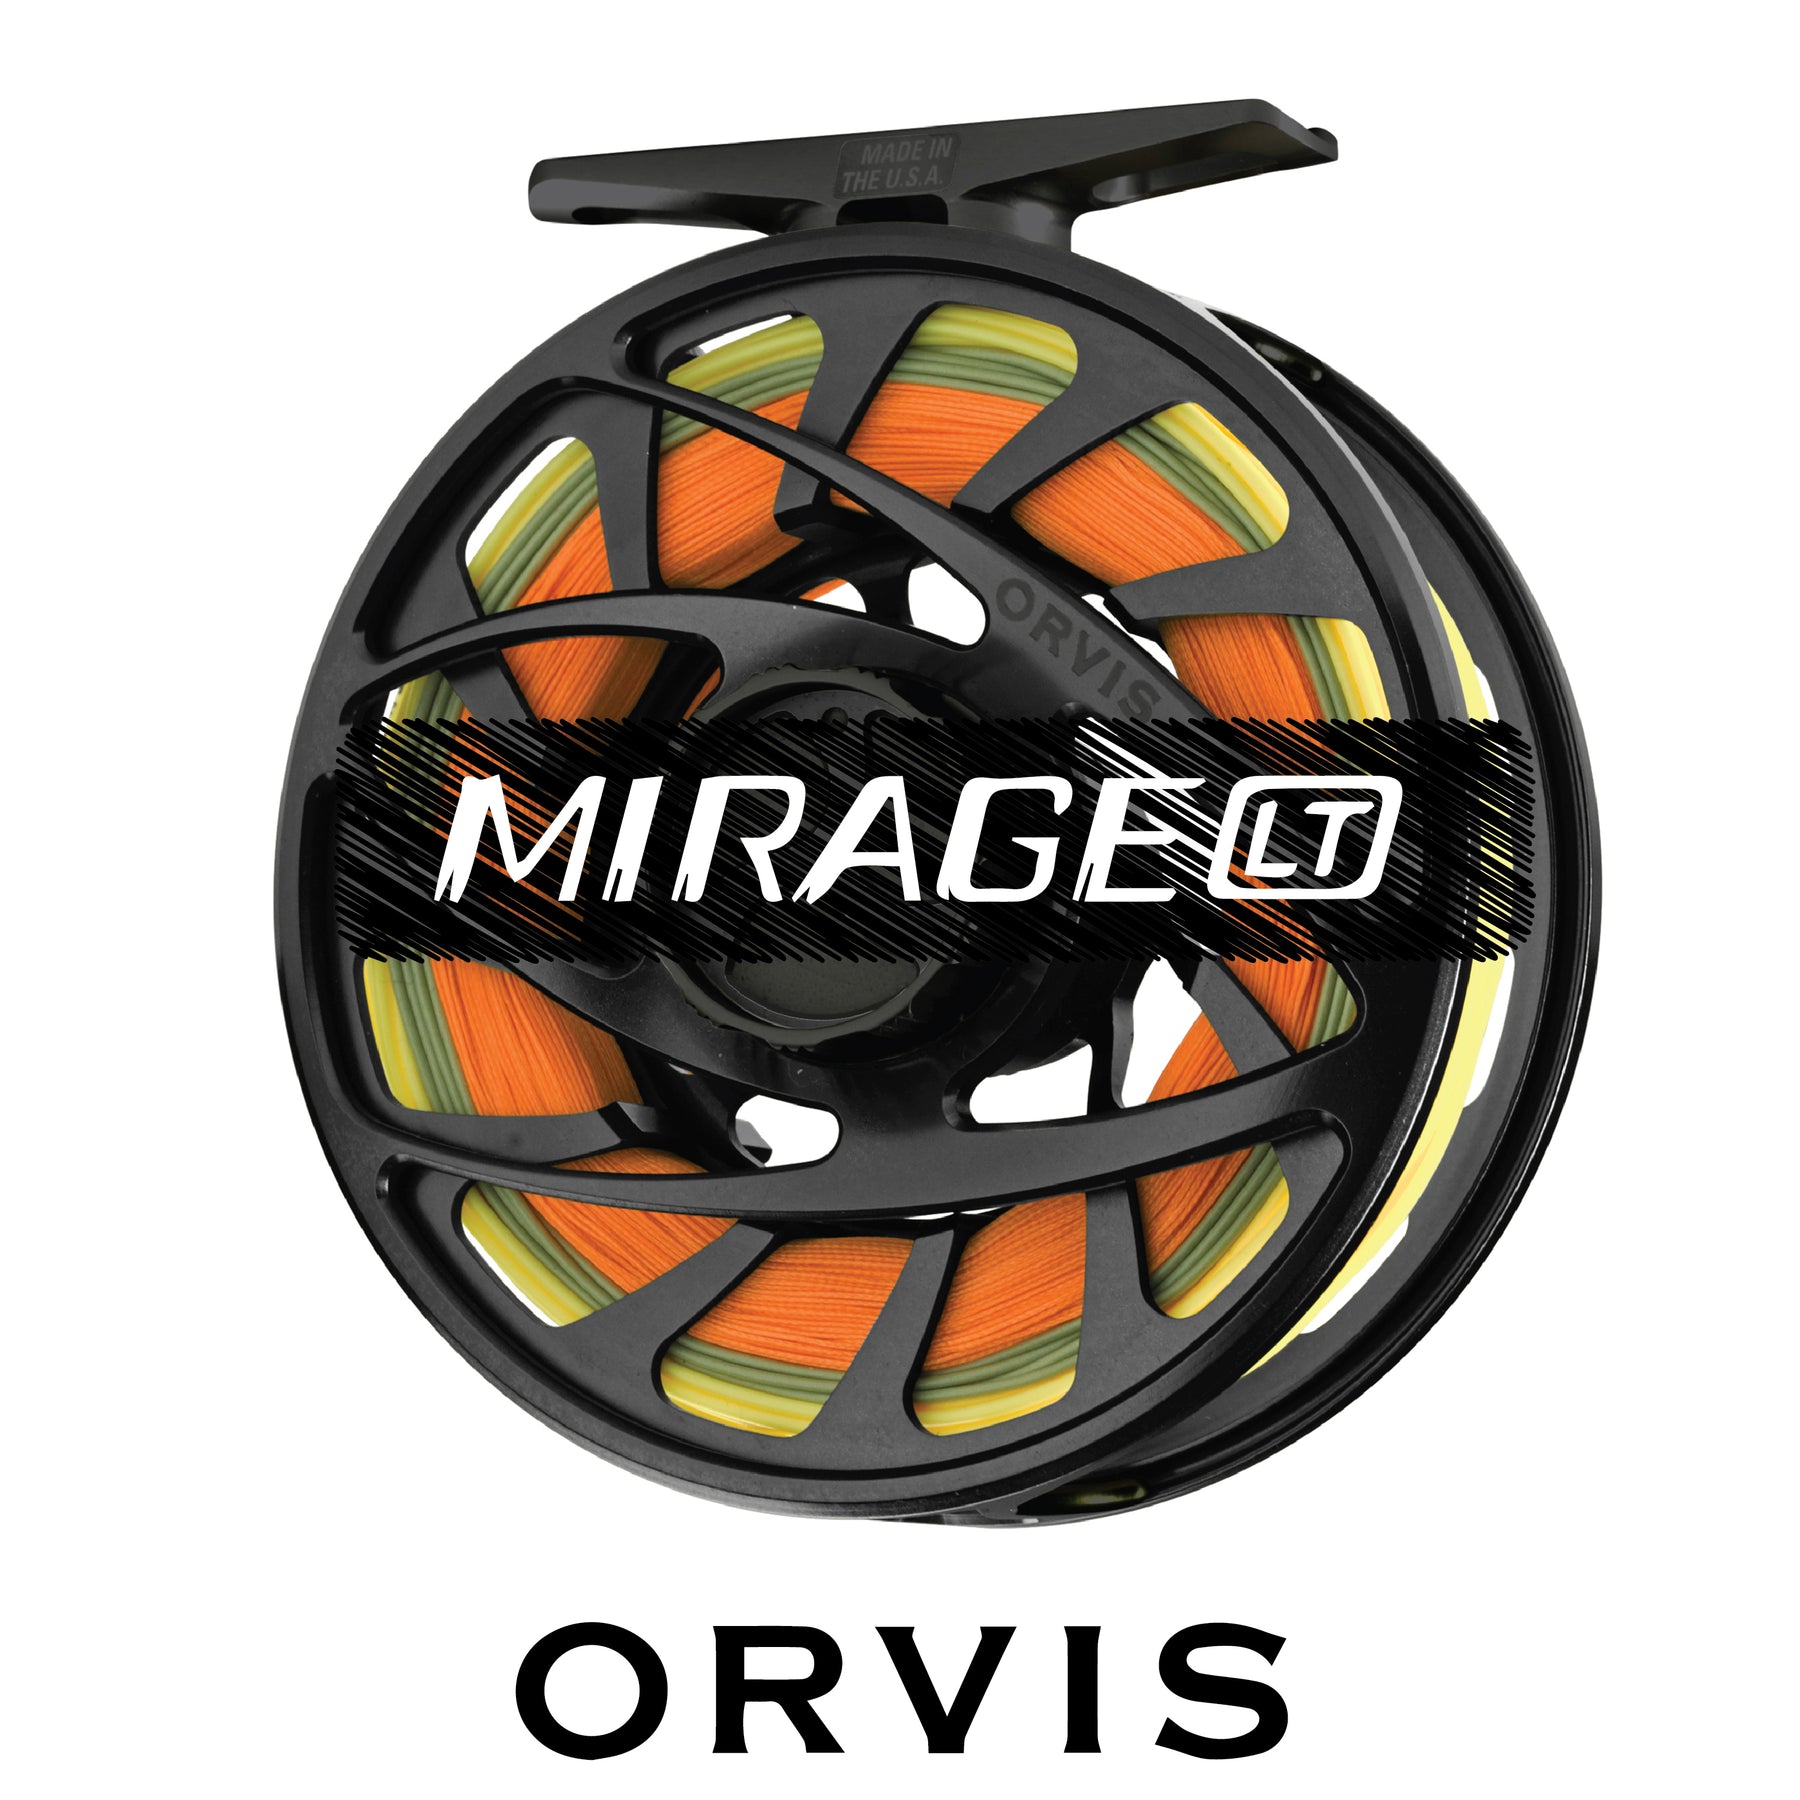 Orvis Mirage LT Fly Reel - Blackout - IV